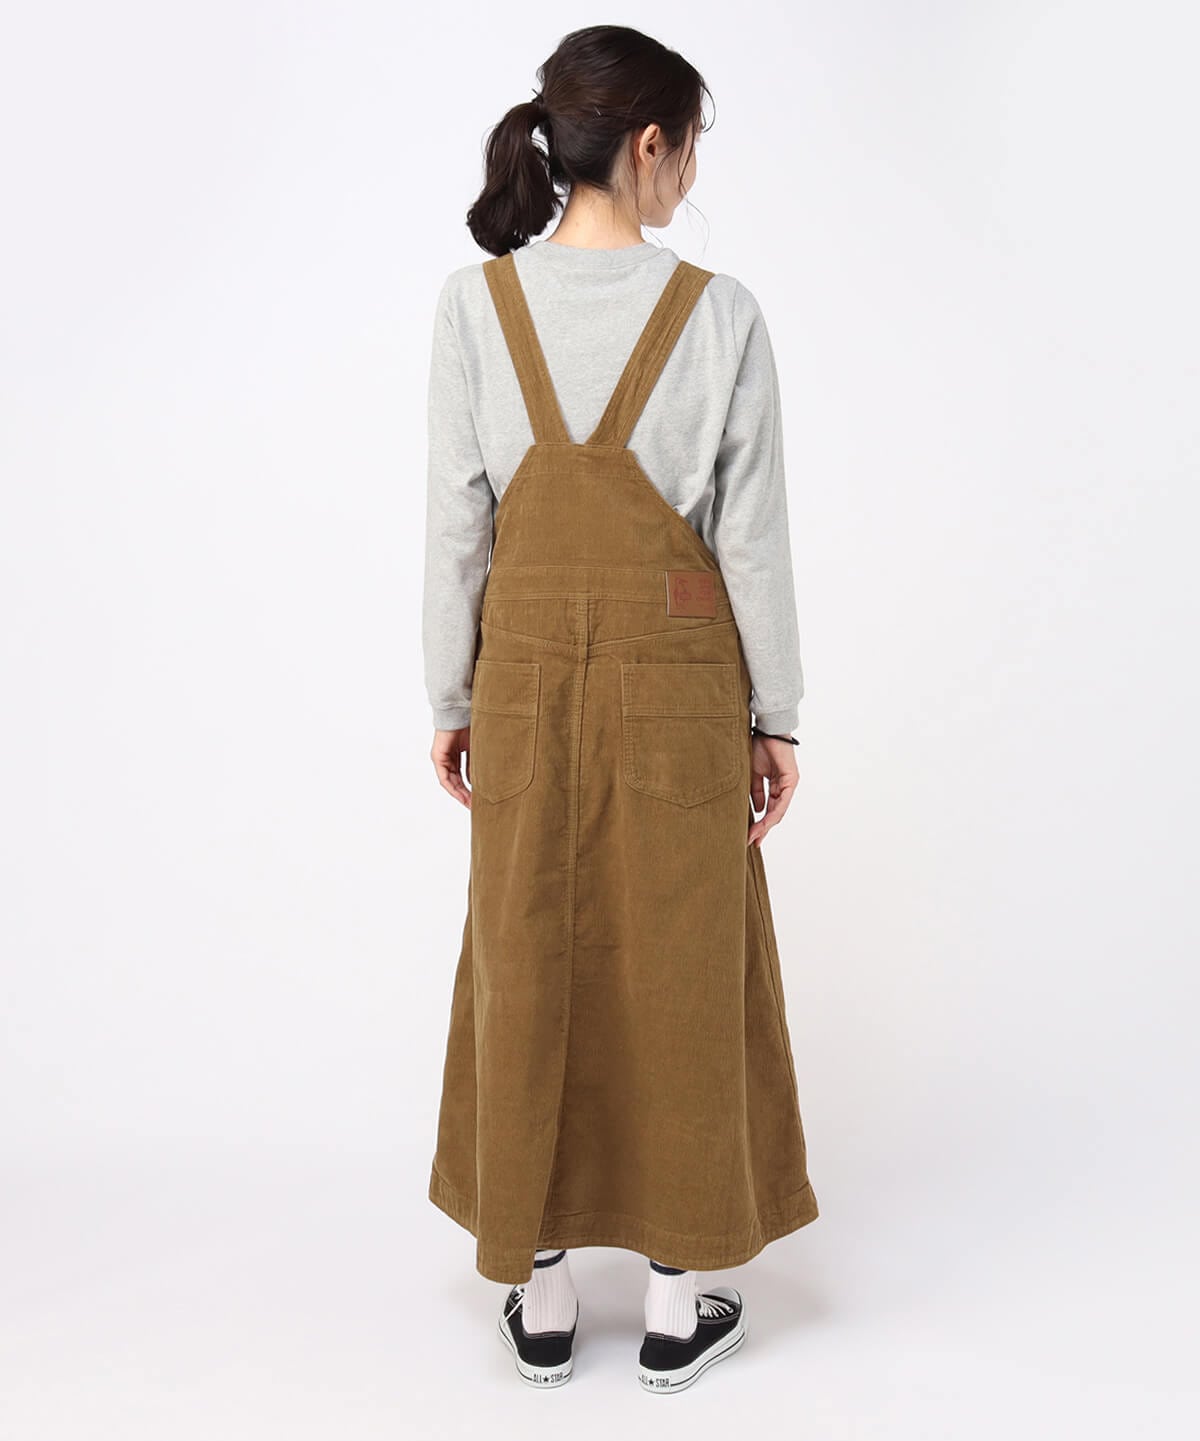 All Over The Corduroy Overall Skirt/オールオーバーザコーデュロイオーバーオールスカート(オーバーオール｜スカート)(Womens  M Beige): ワンピース｜スカート|CHUMS(チャムス)|アウトドアファッション公式通販